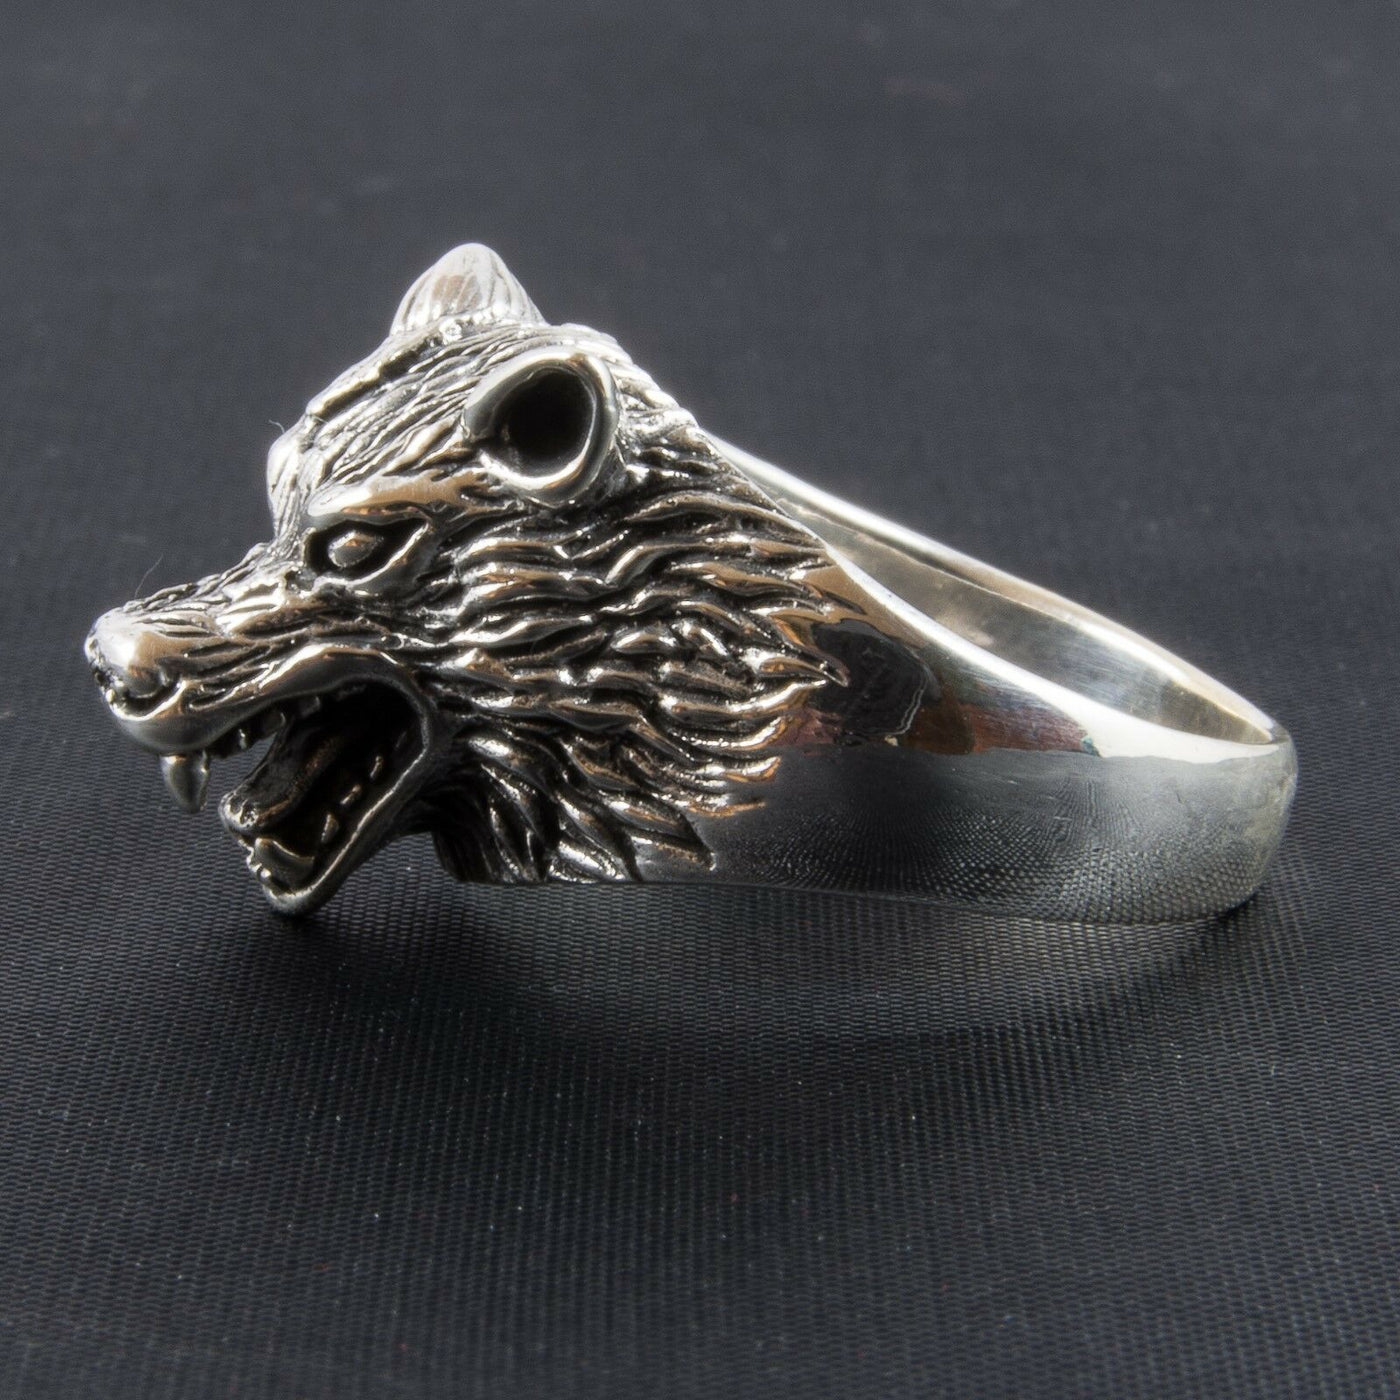 Were Wolf Ring .925  silver Metal Biker Gothic Punk Stark Game Throne feeanddave